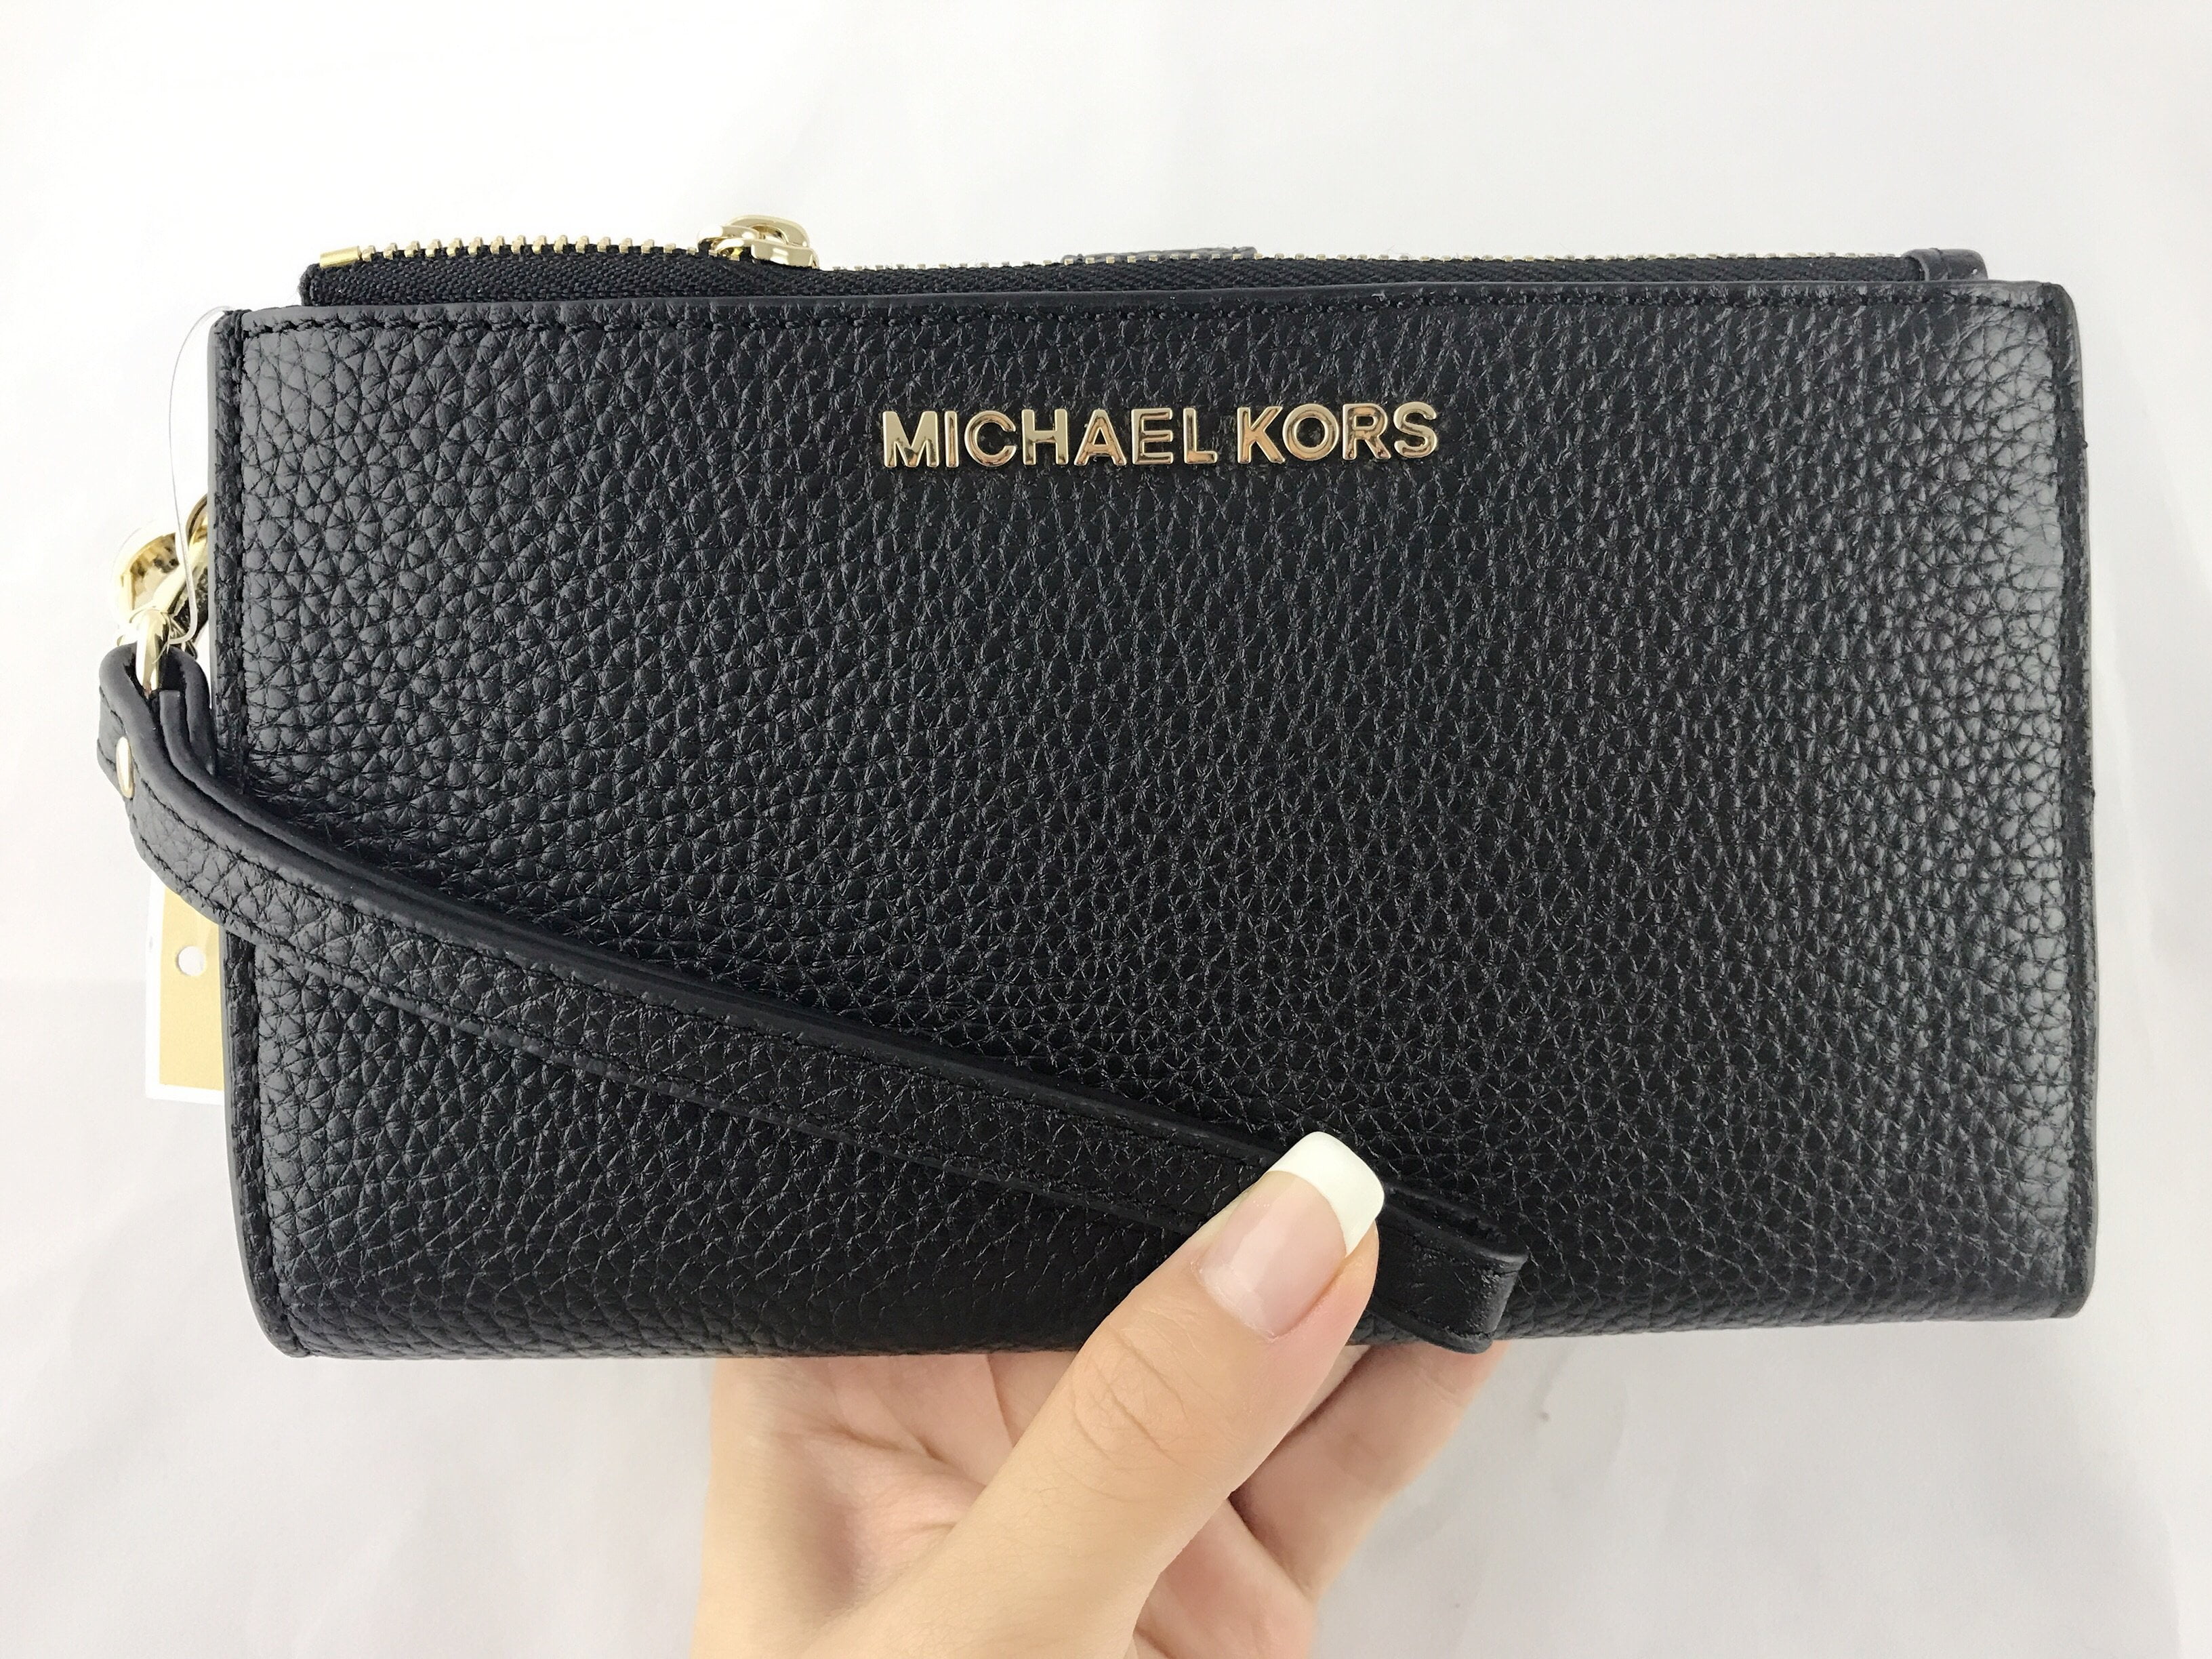 Michael Kors Jet Set Double Zip Wristlet Phone Wallet Black Pebbled Leather